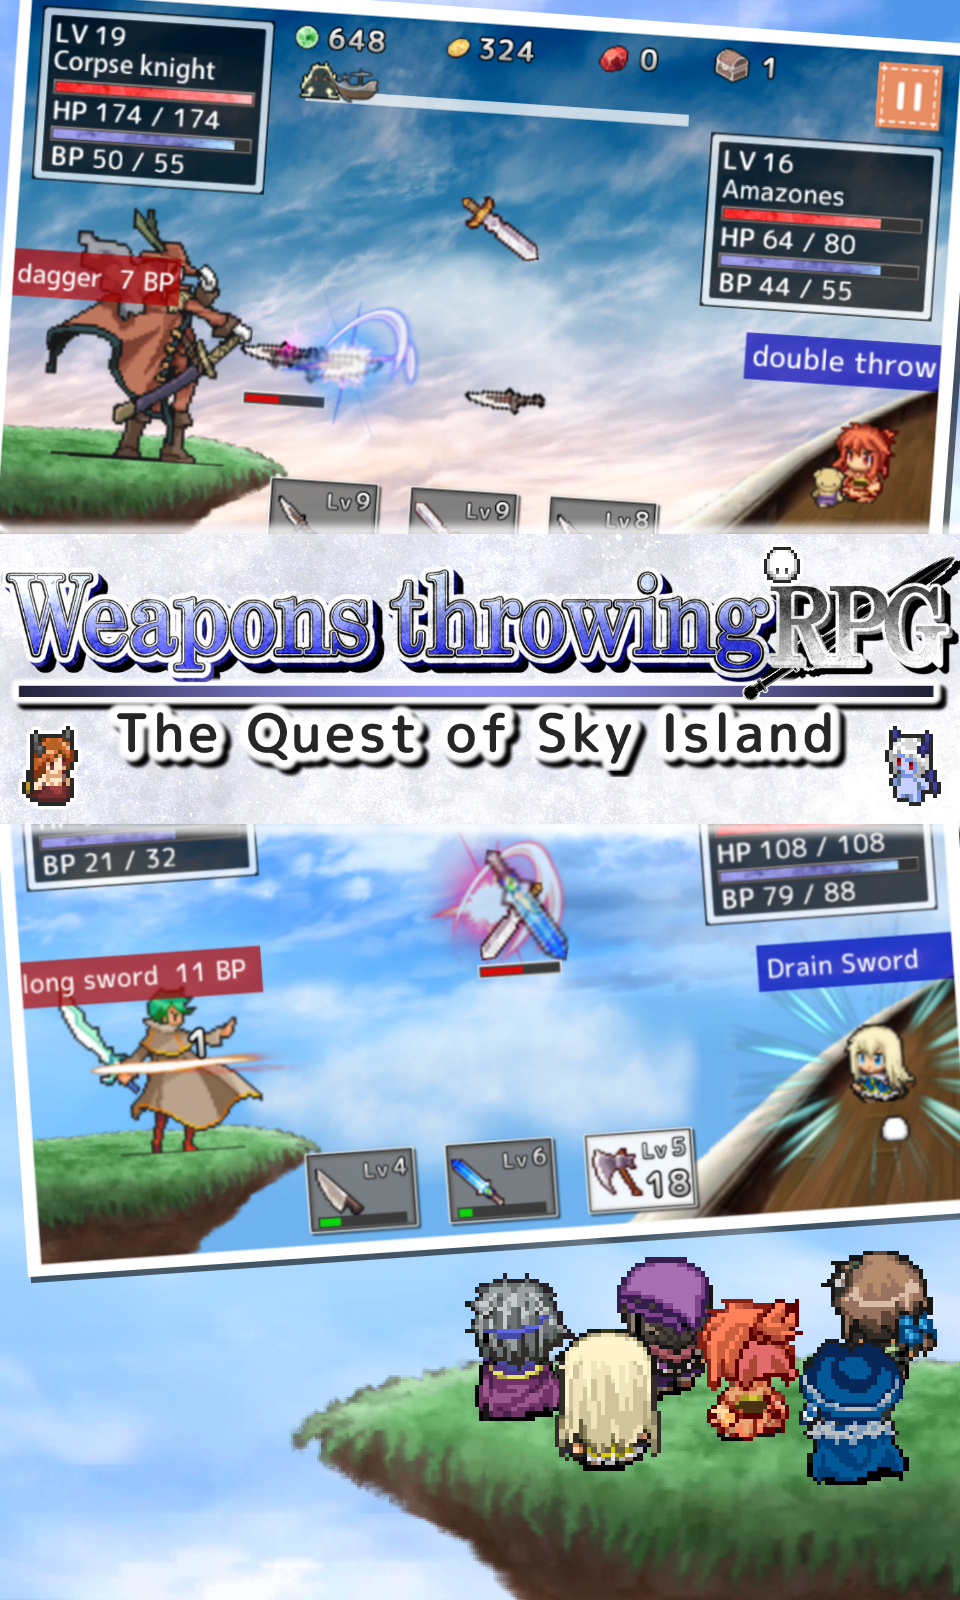 Screenshot of Weapons throwing RPG